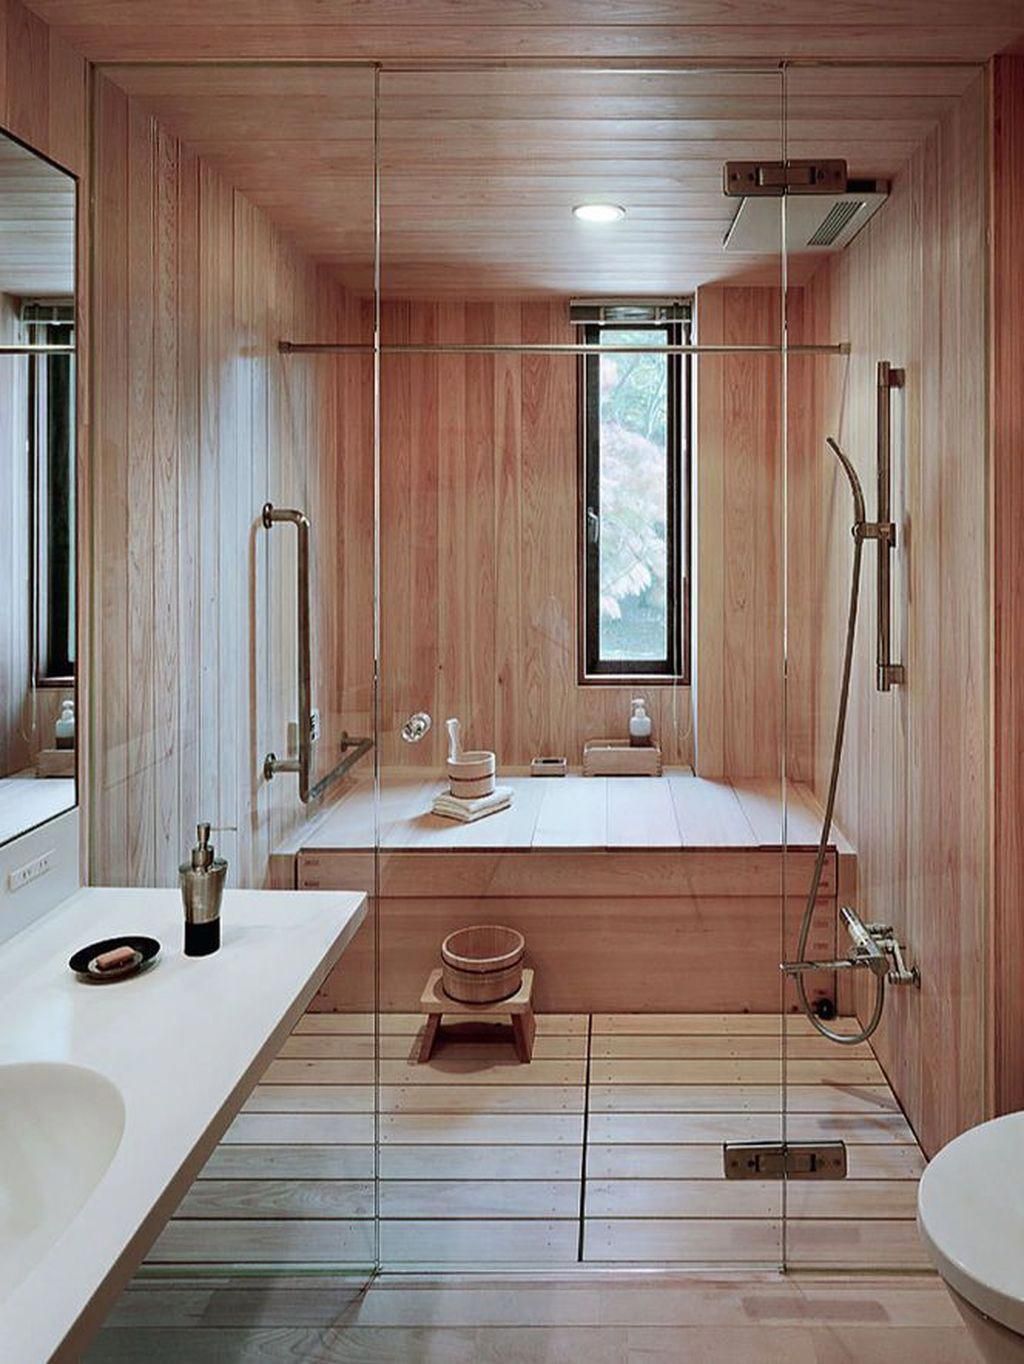 Top Tips For Creating A Zen Inspired Bathroom Retreat